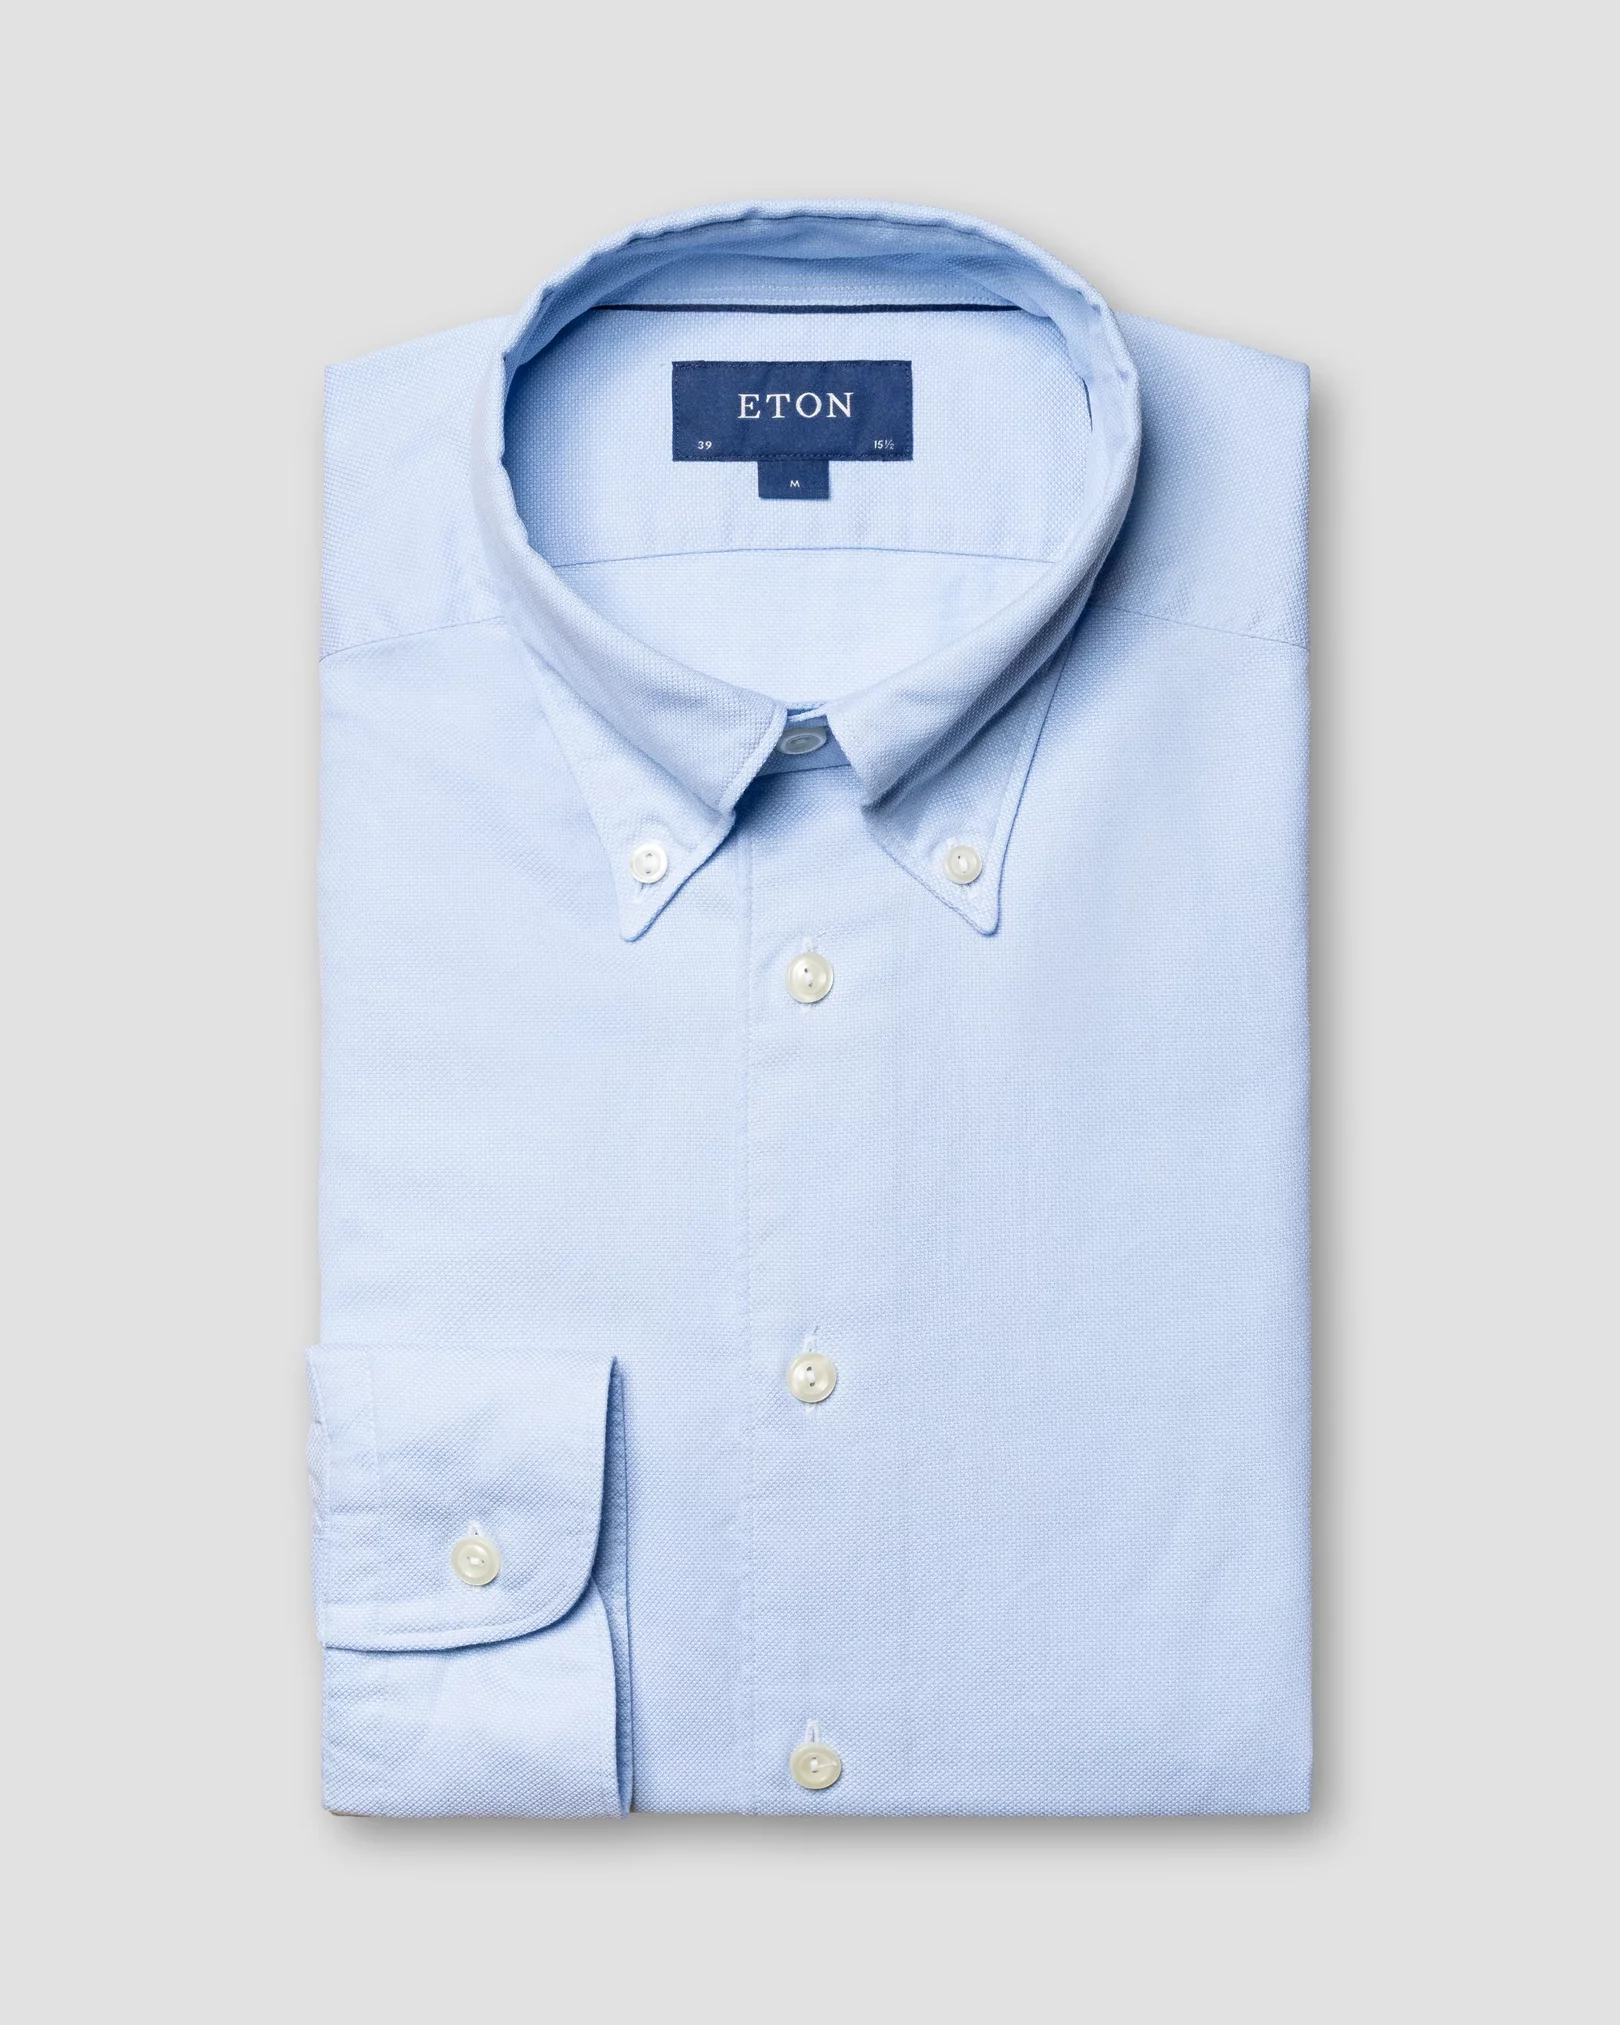 Light blue oxford shirt - button down collar - Eton